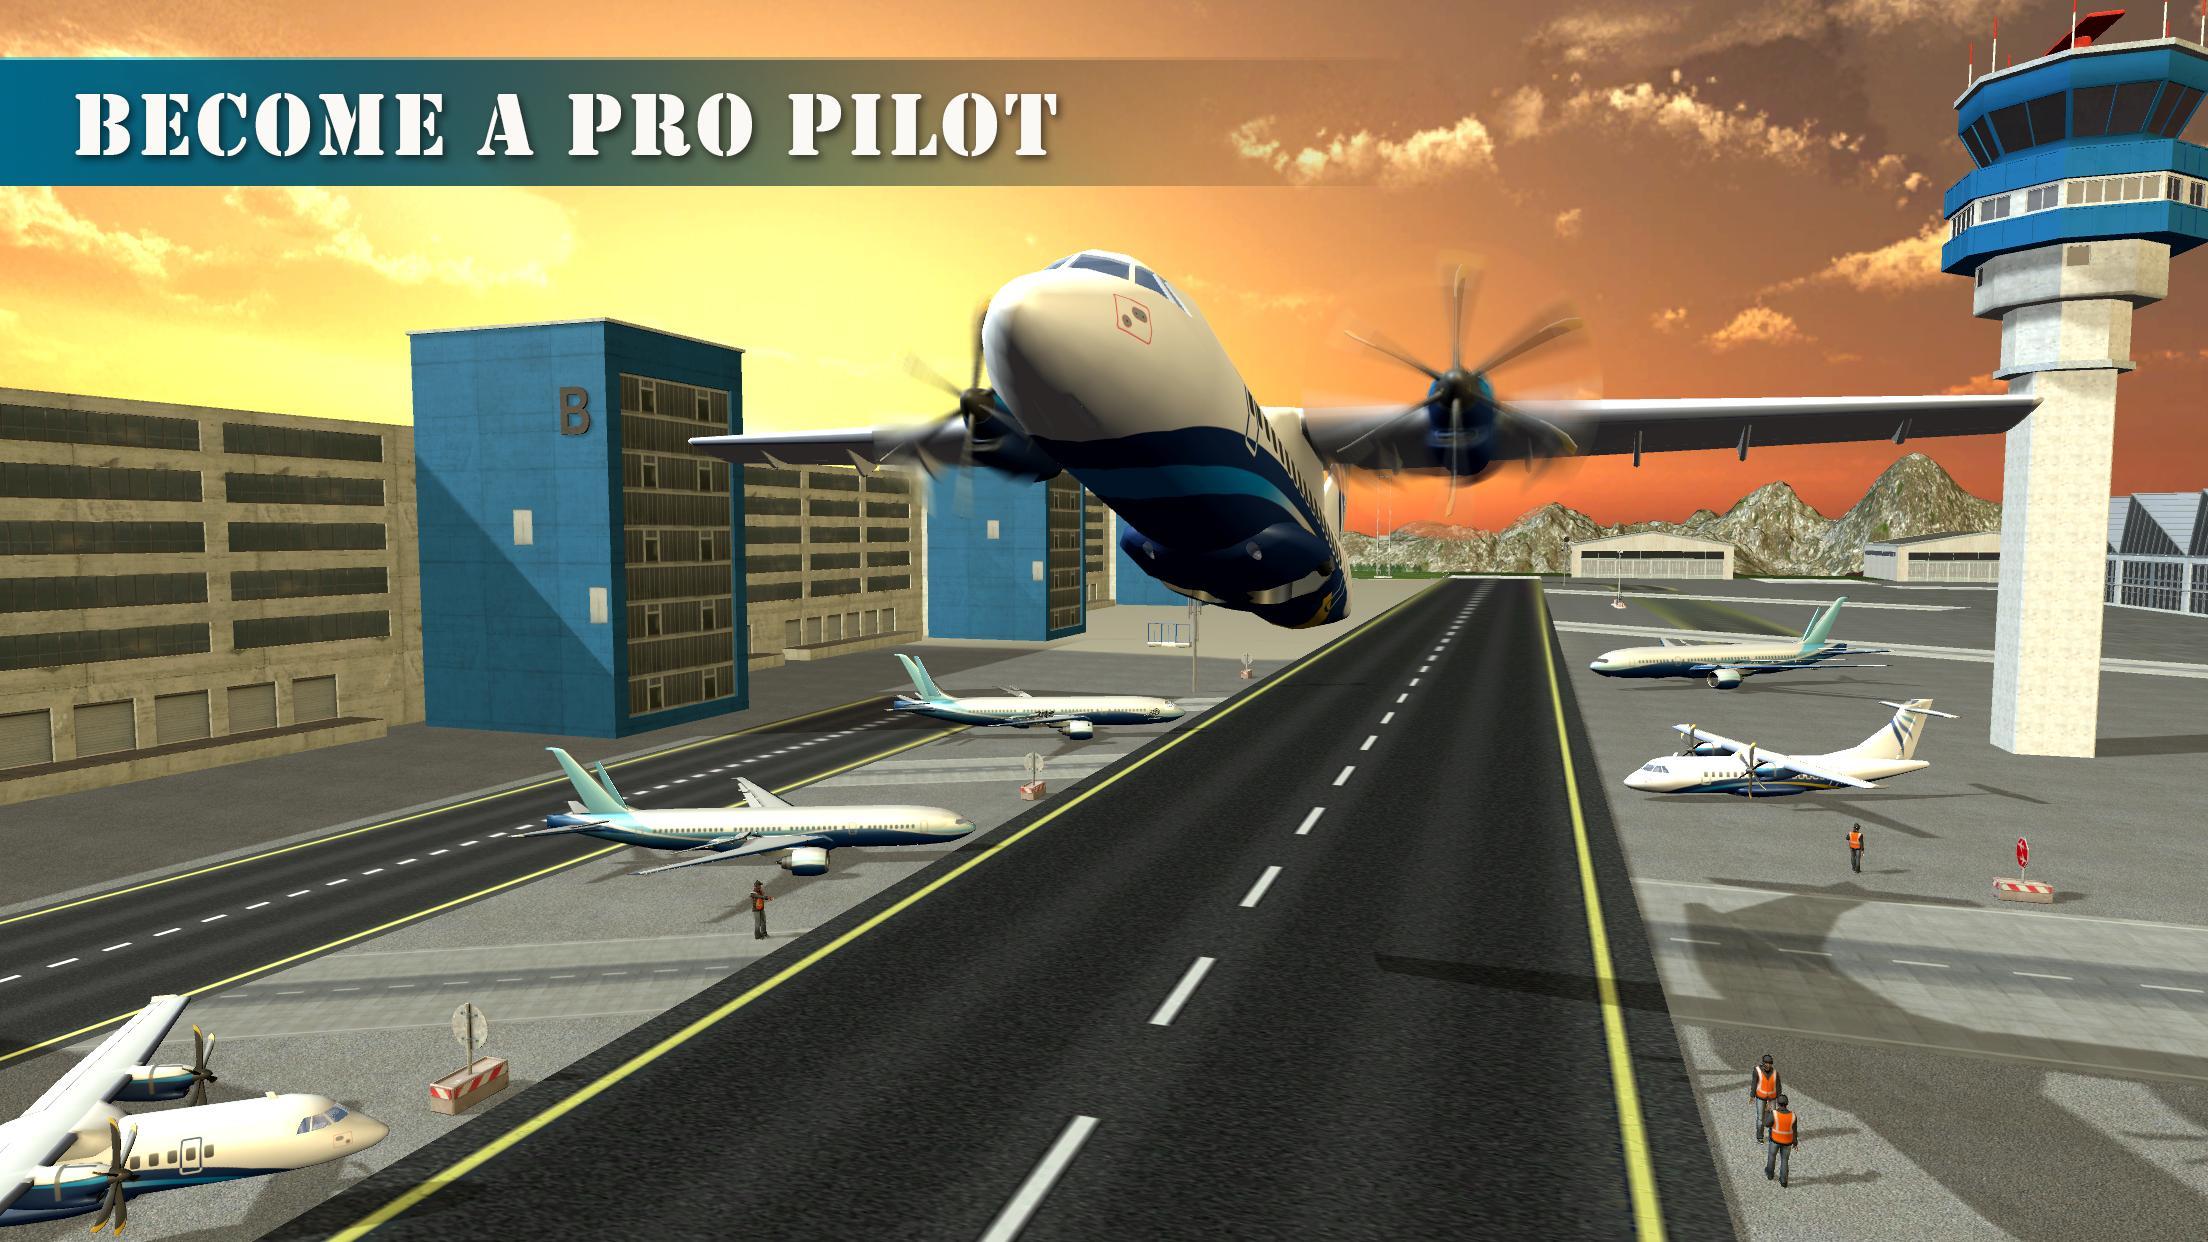 Airplane Pilot Training Academy Flight Simulator For Android Apk Download - pilot training flight simulator roblox controls